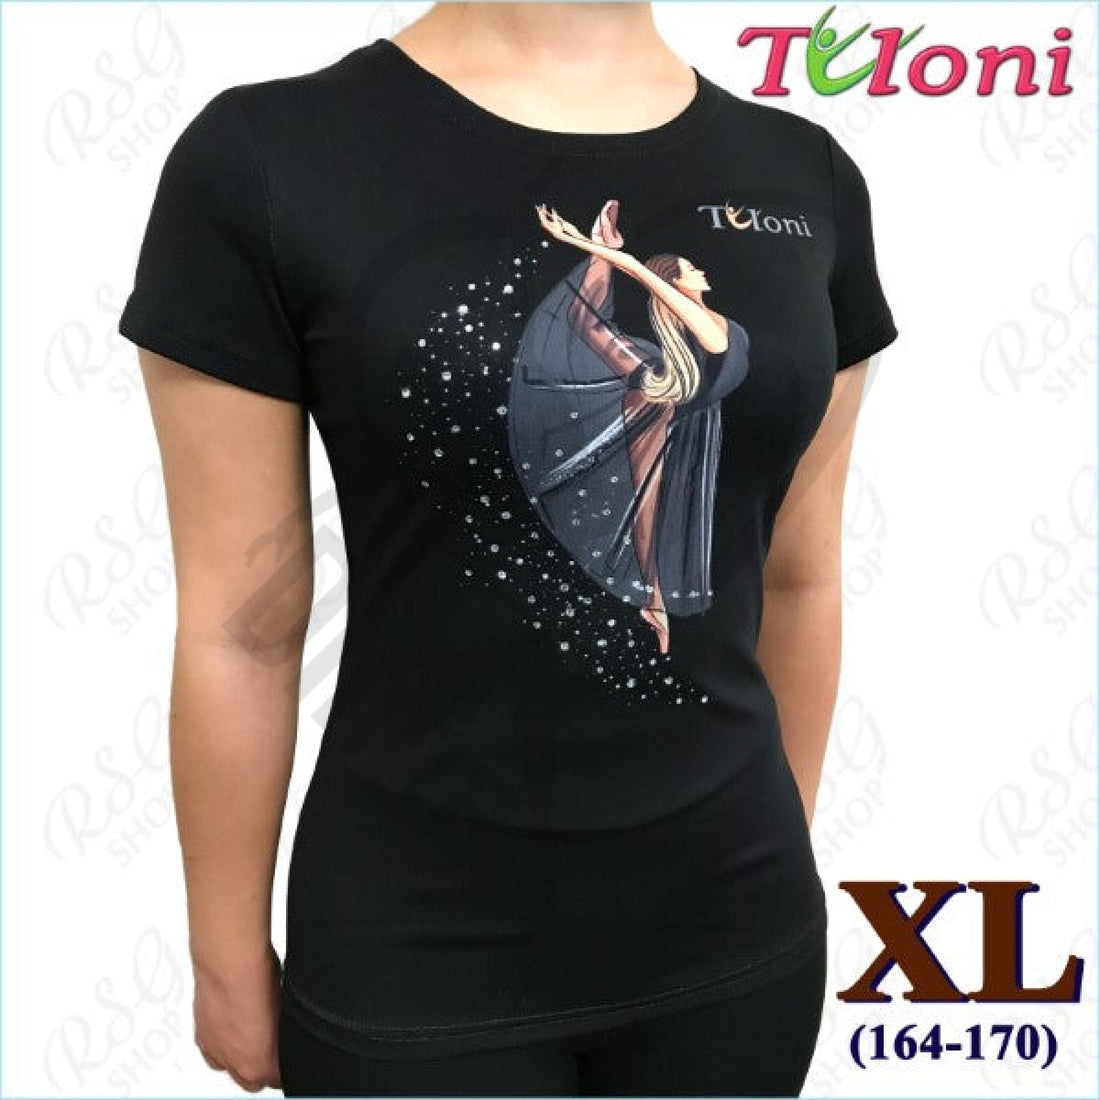 Tuloni Black T-Shirt Mod. Ballet Xl (164-170) T Shirts & Tops